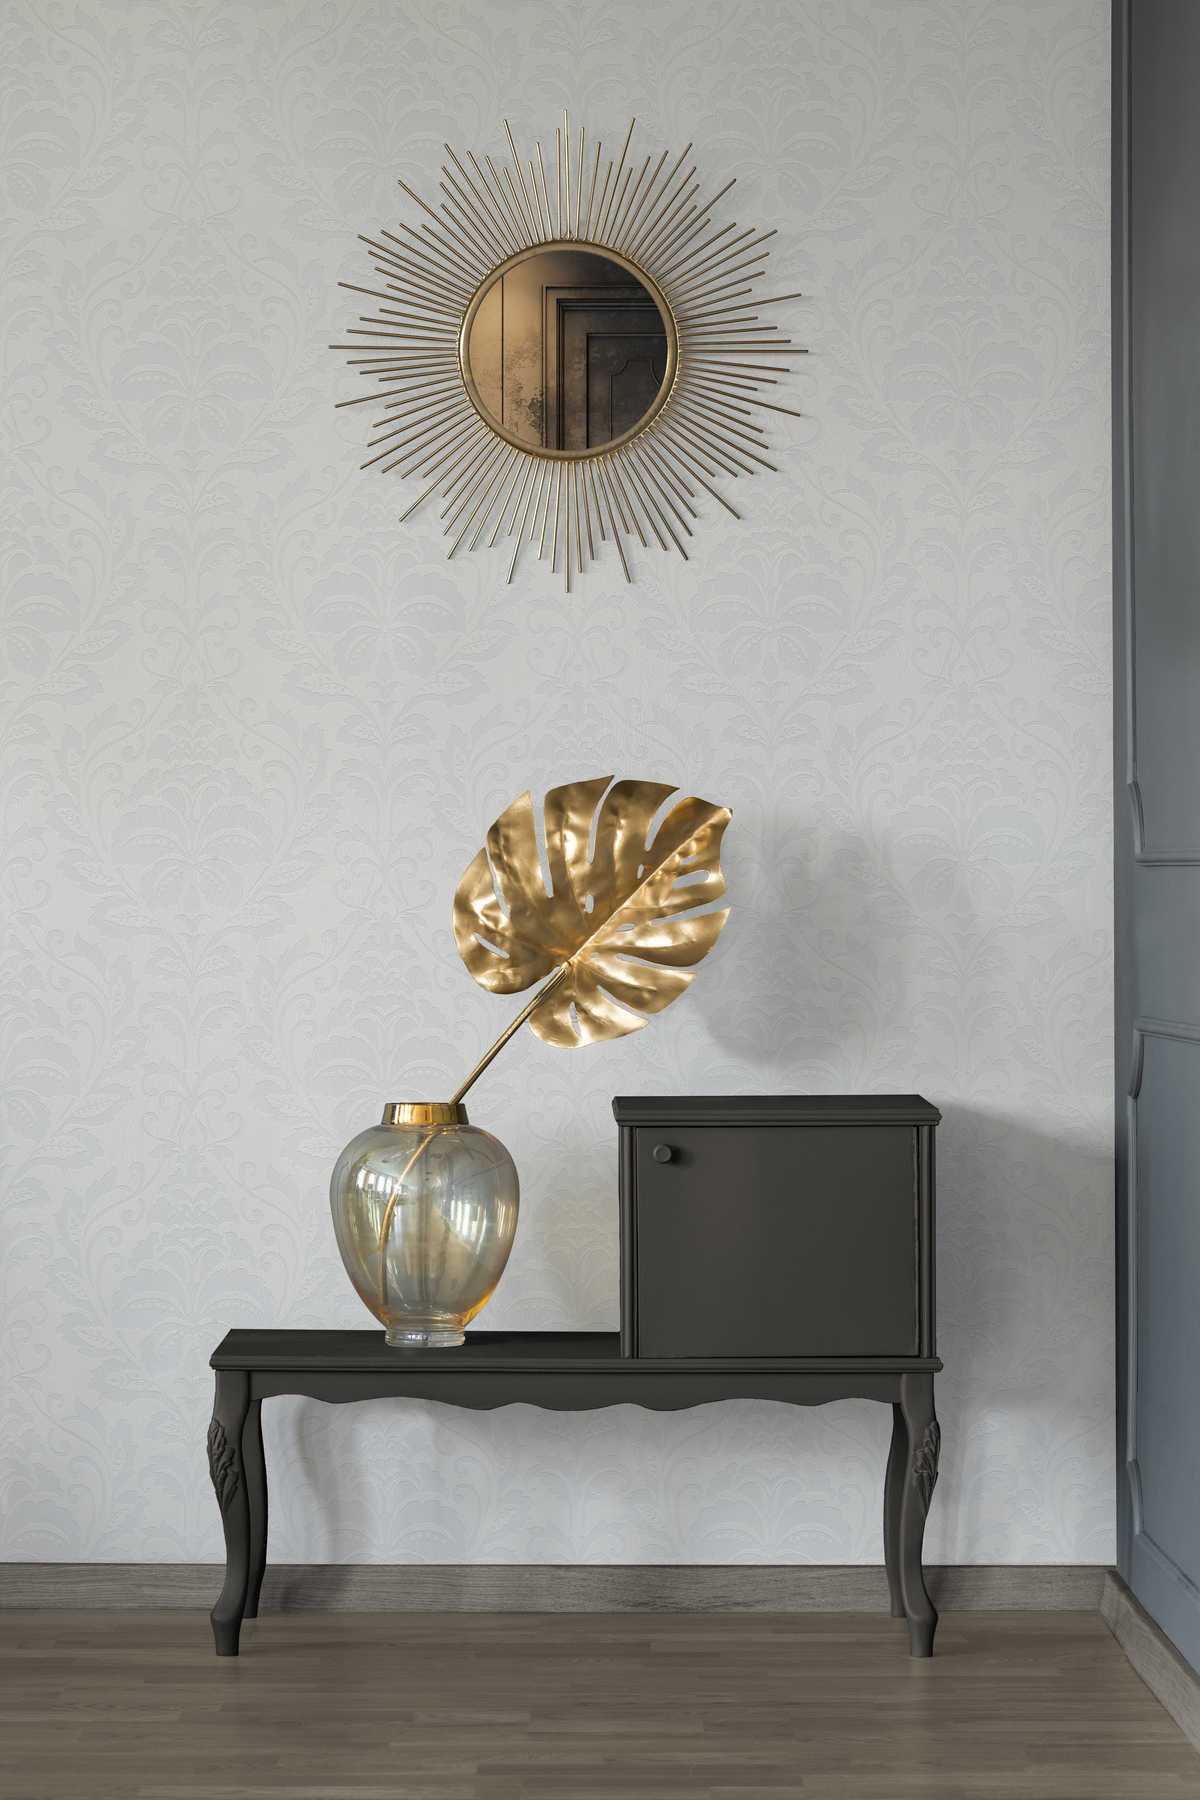             Ornament-Tapete florales Design, Matt/Glanz-Kontrast – Beige
        